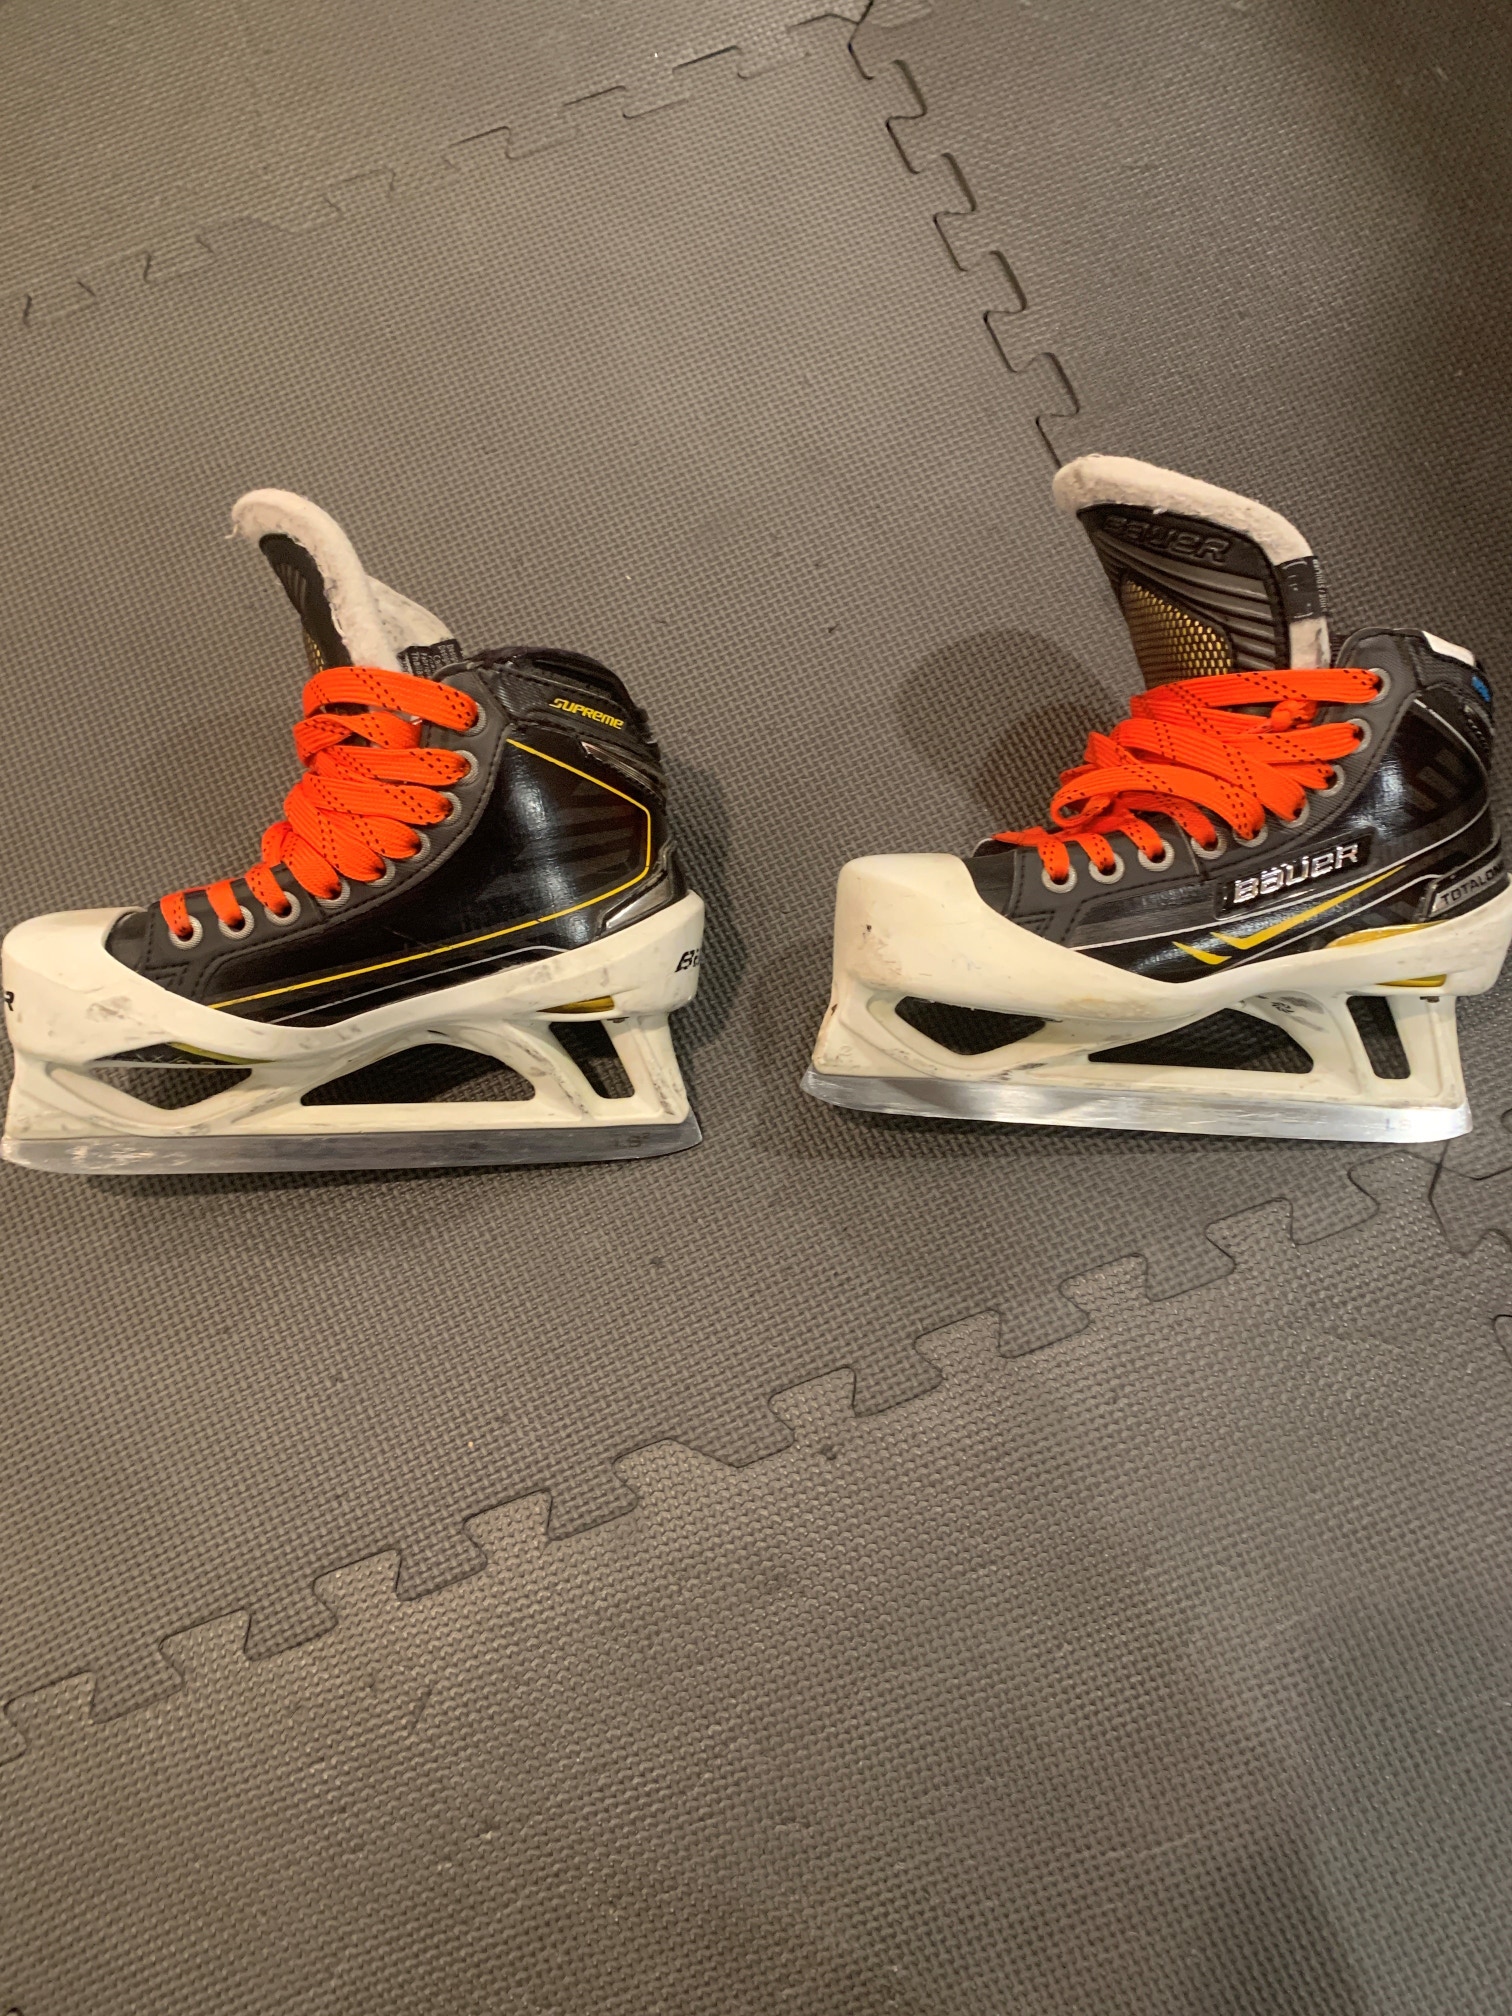 Junior Used Bauer Total One NXG Hockey Goalie Skates Regular Width Size 3